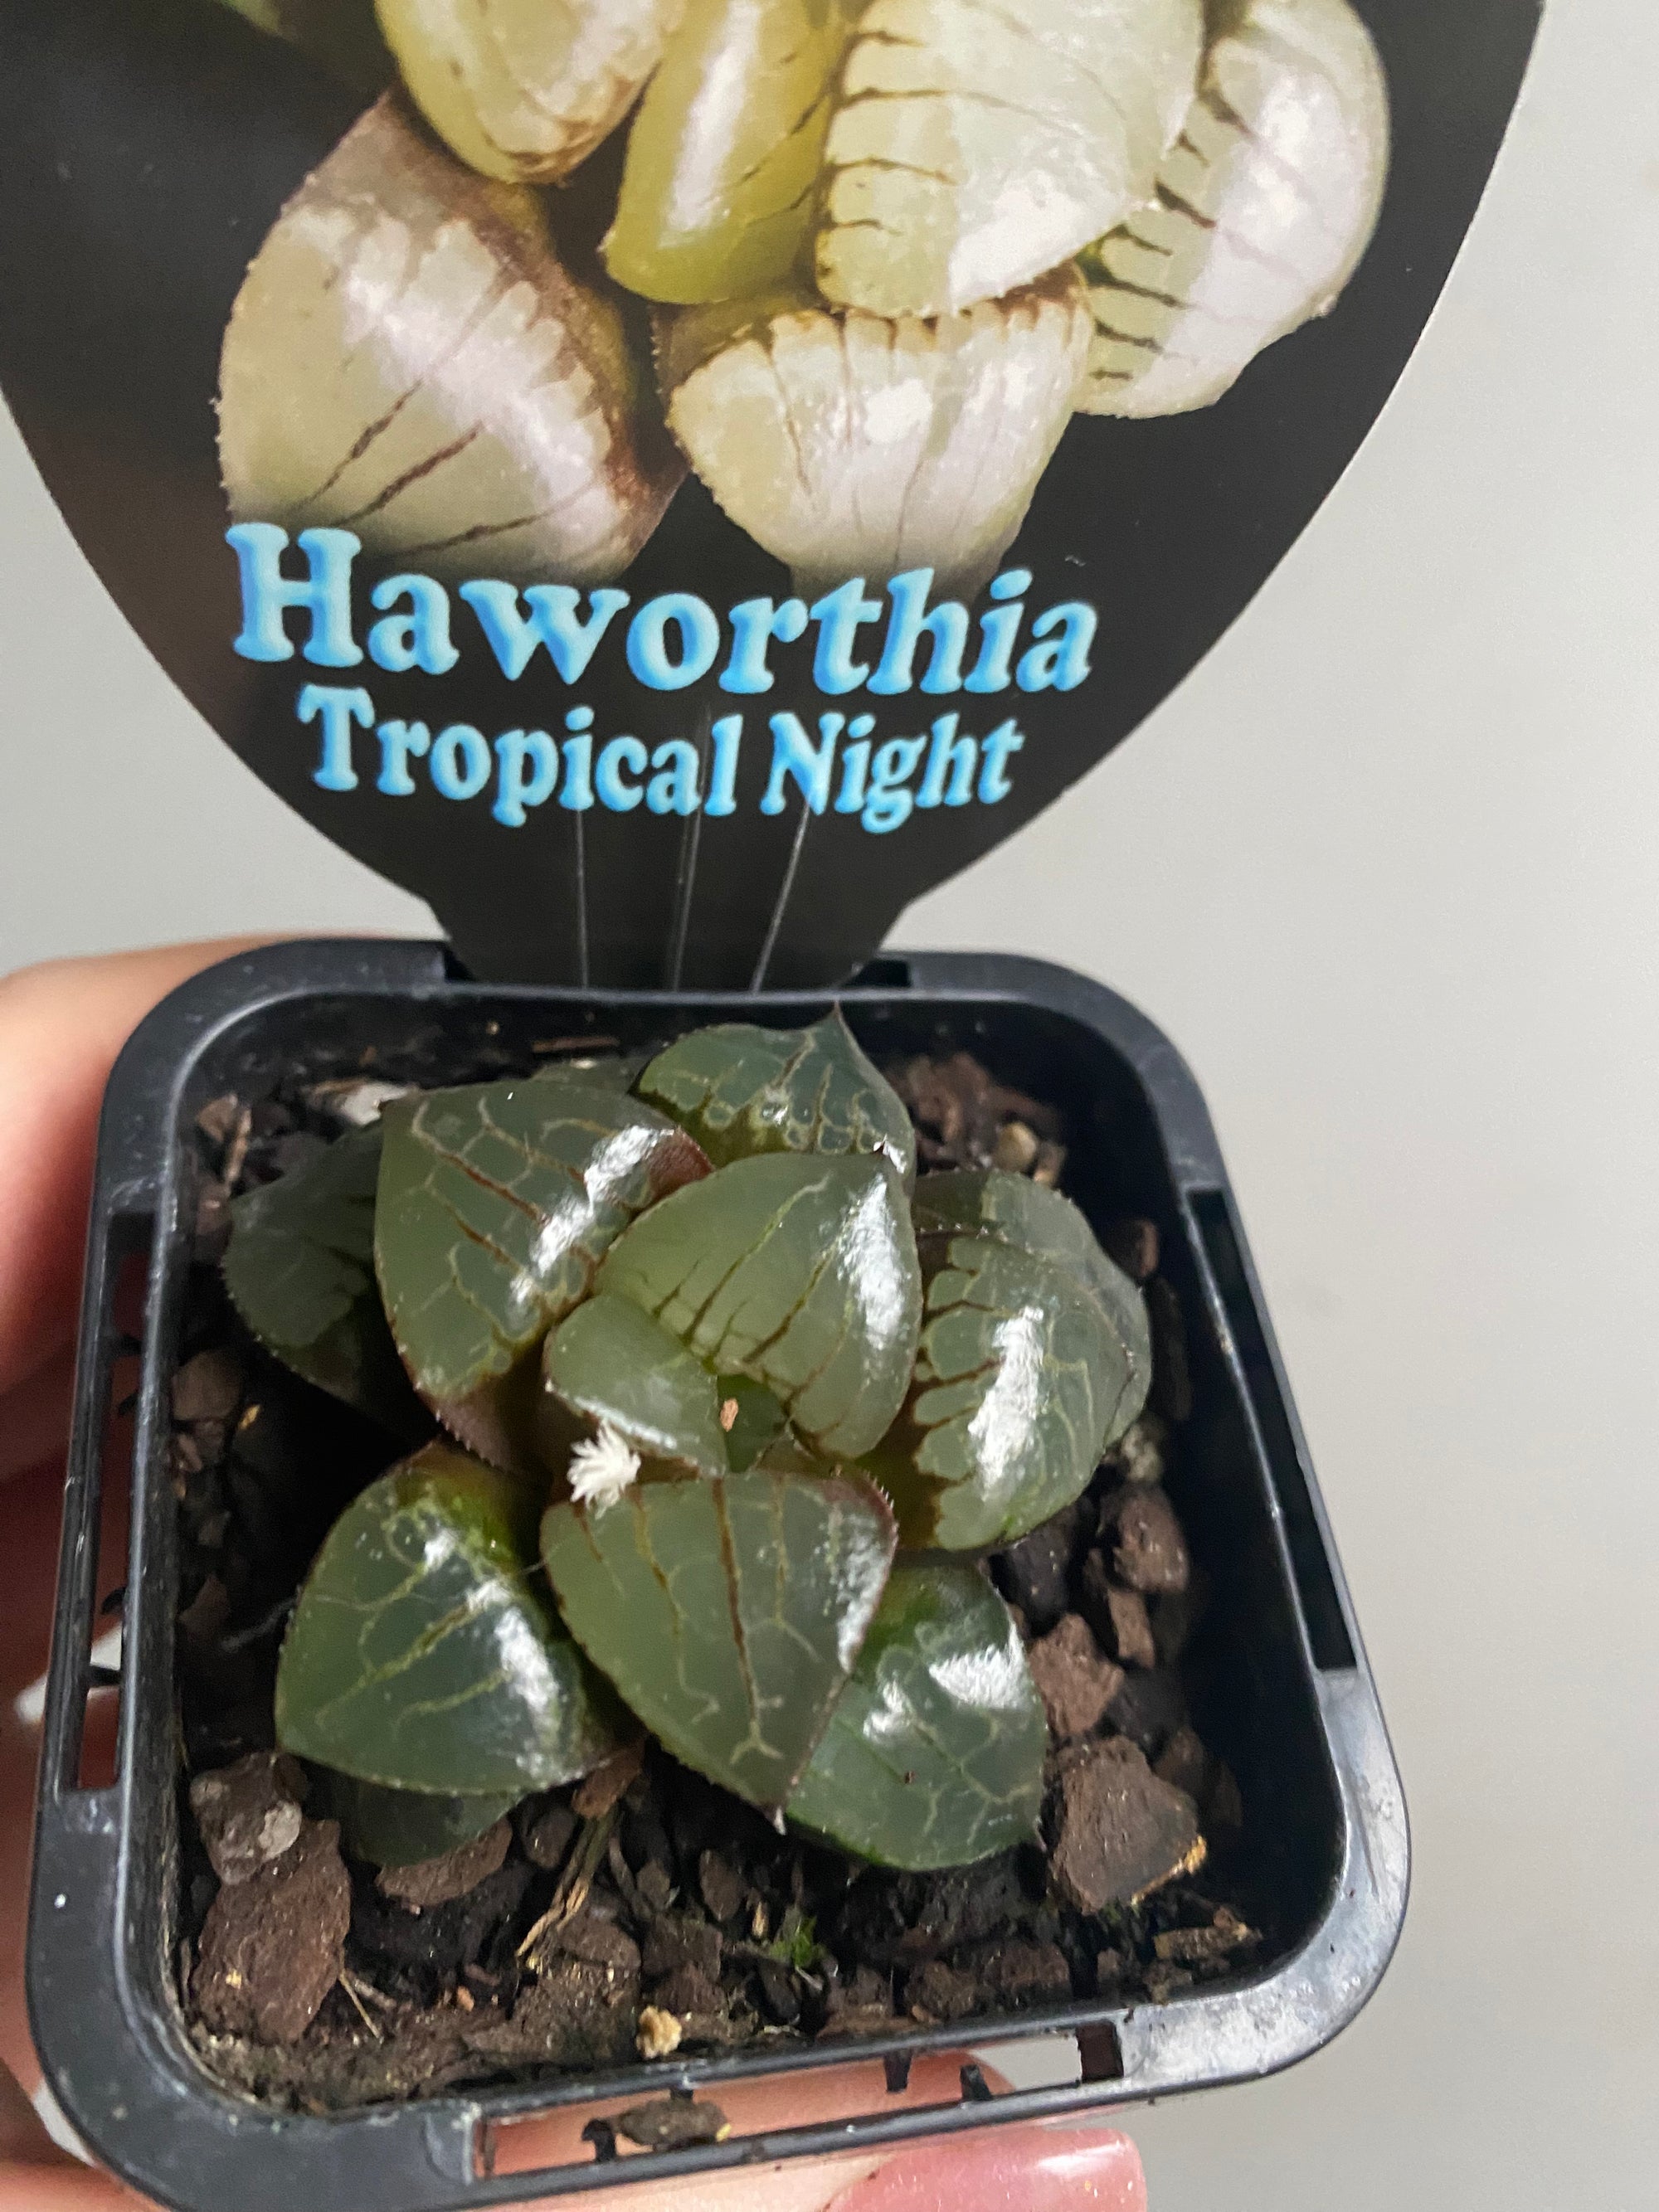 Haworthia 'Tropical Night'